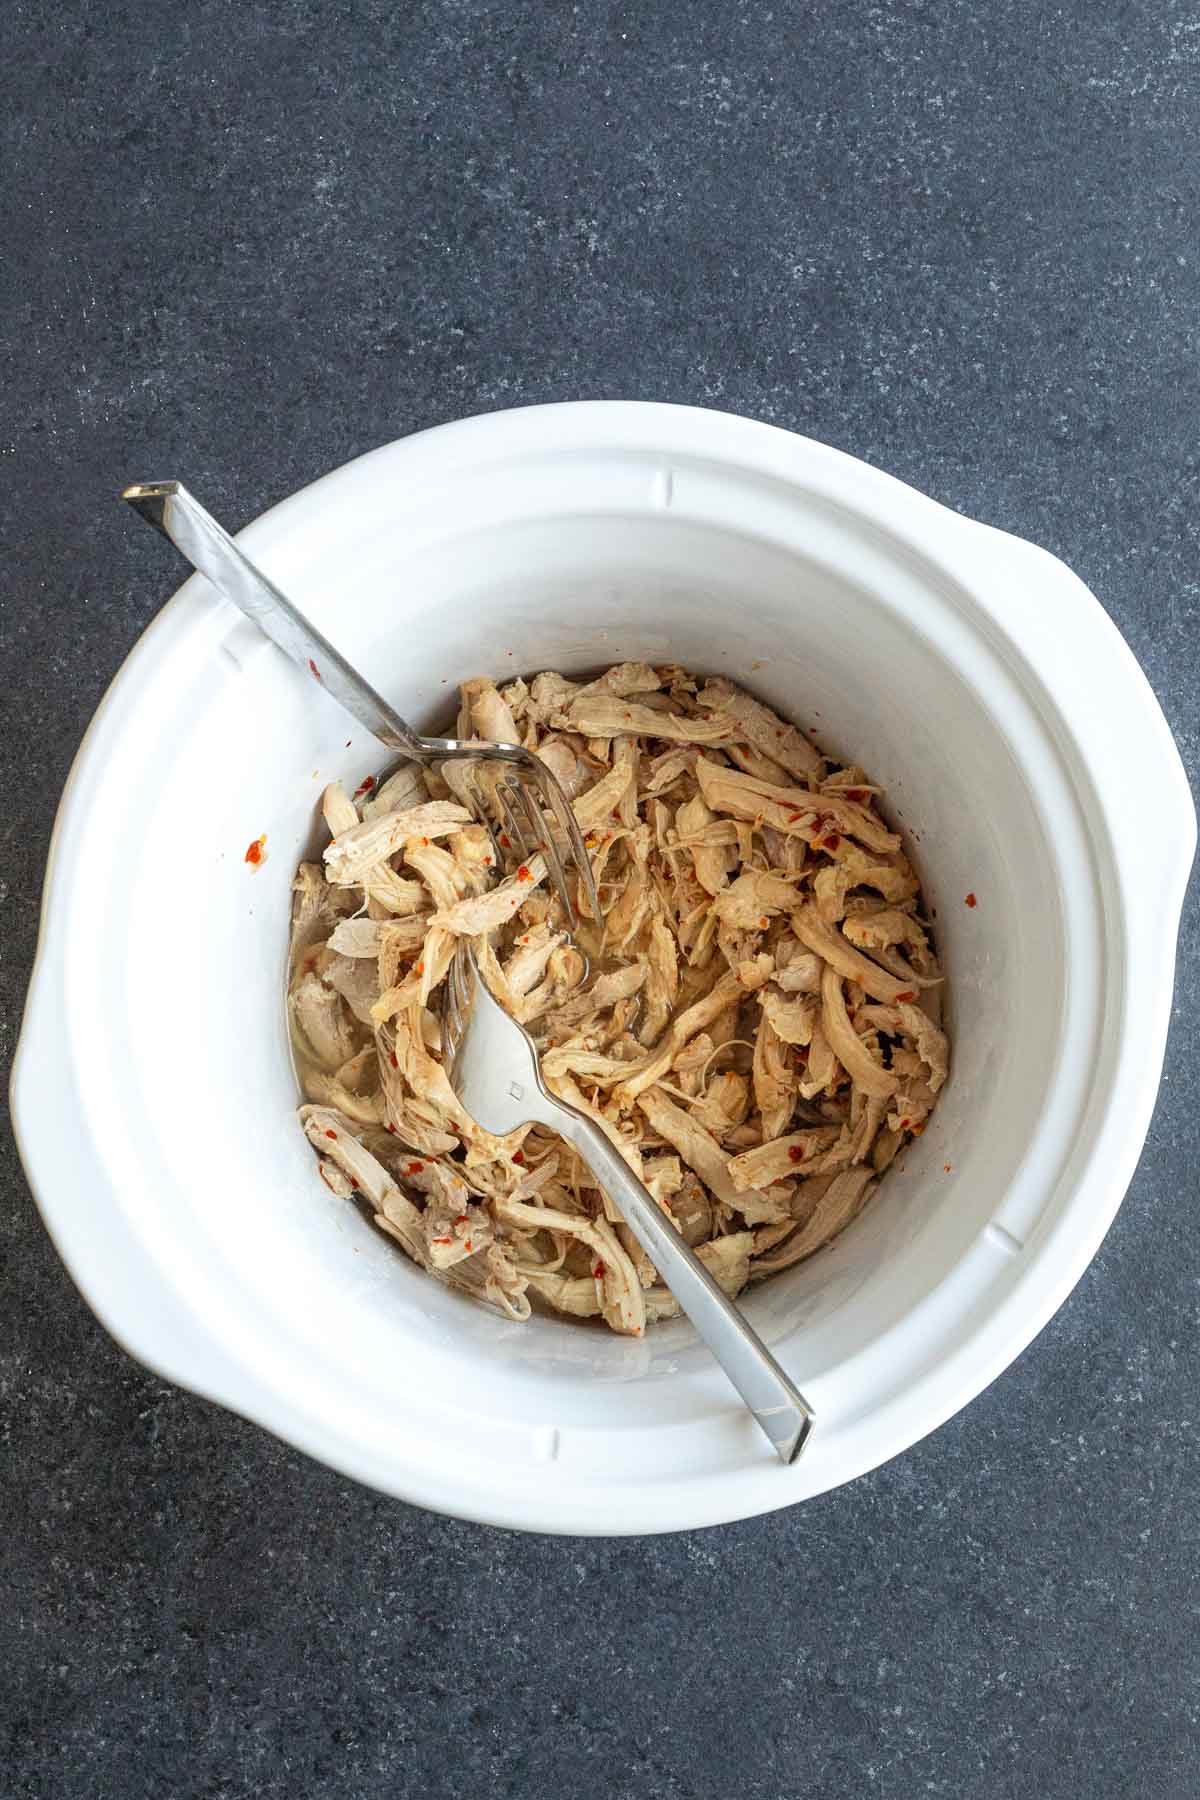 Shredded Ingredients for Carolina BBQ Vinegar Shredded Chicken in slow cooker